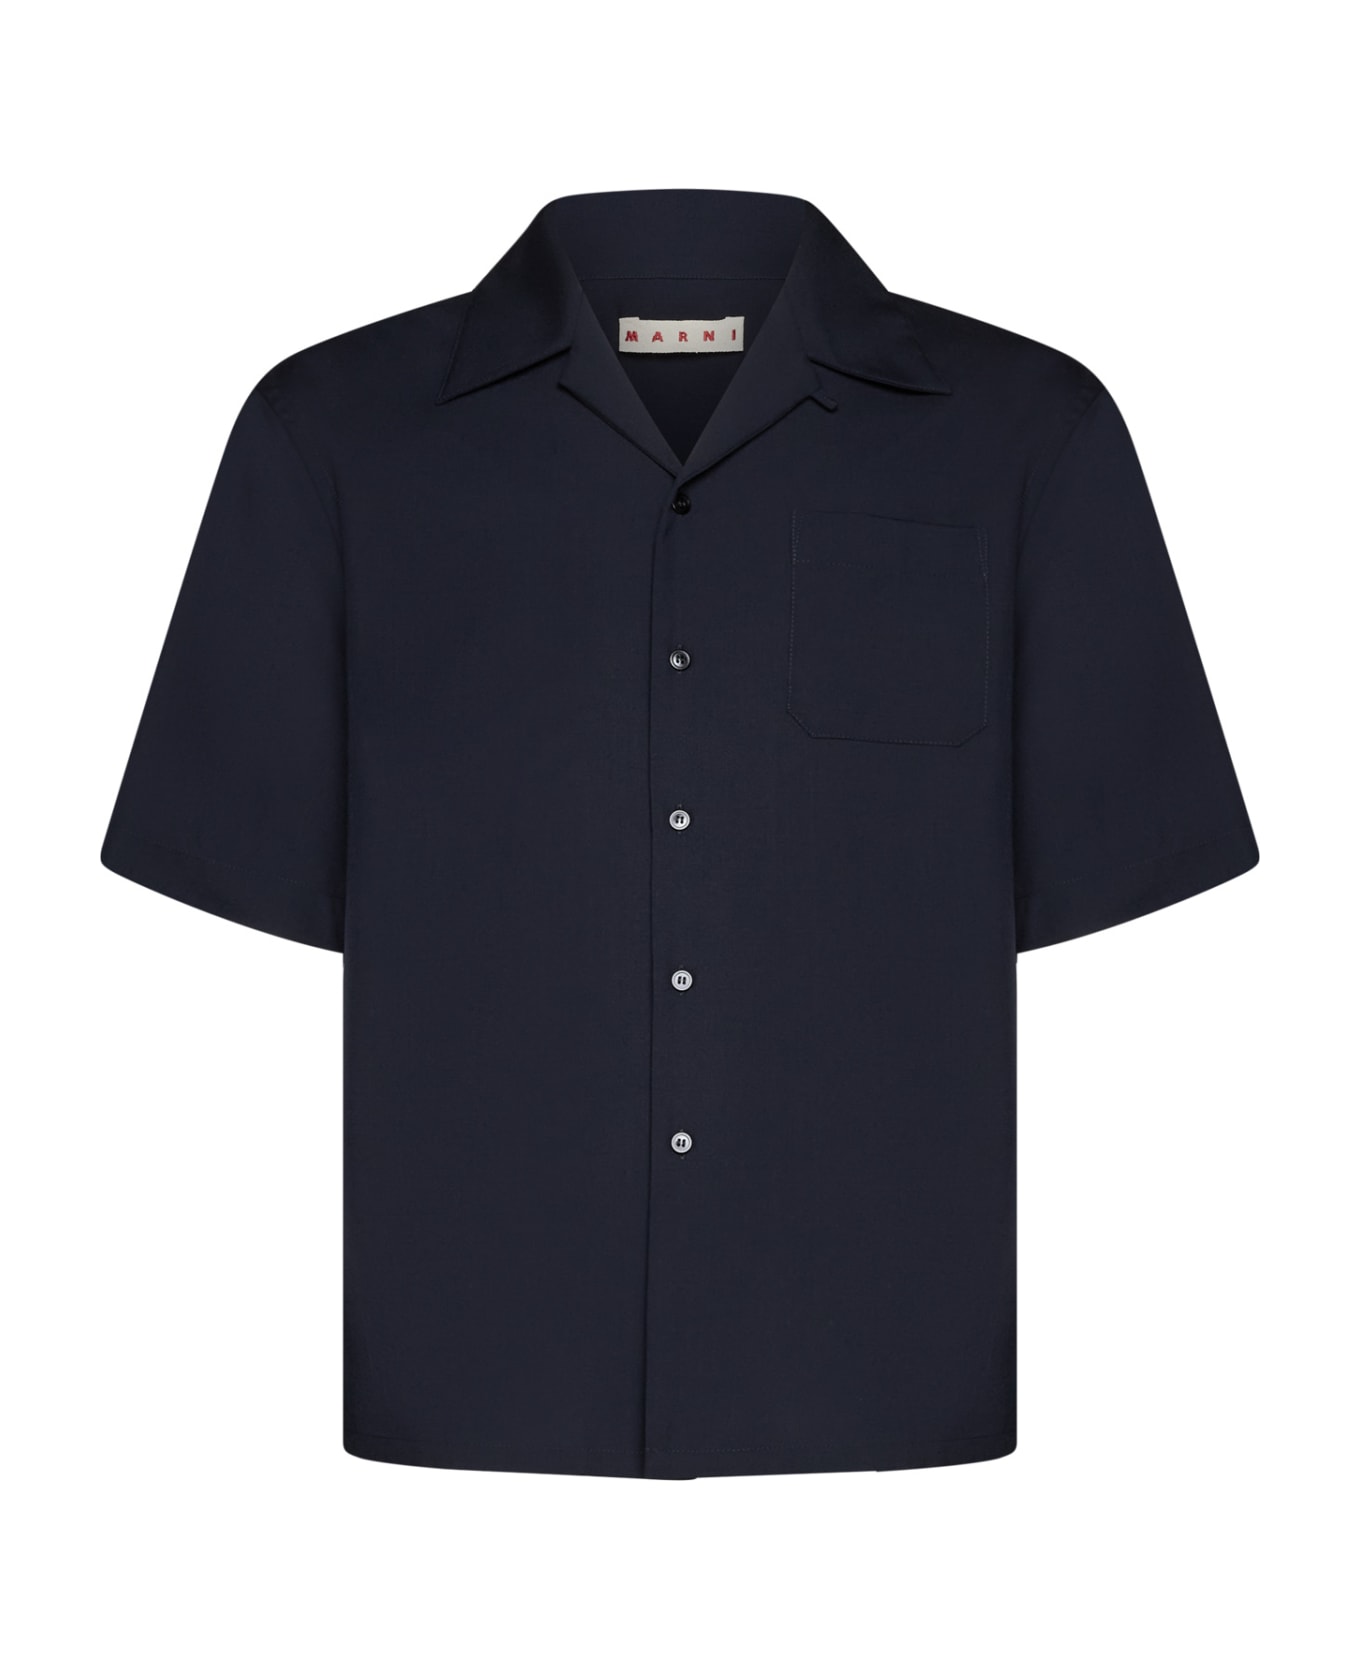 Marni Shirt - Blu black